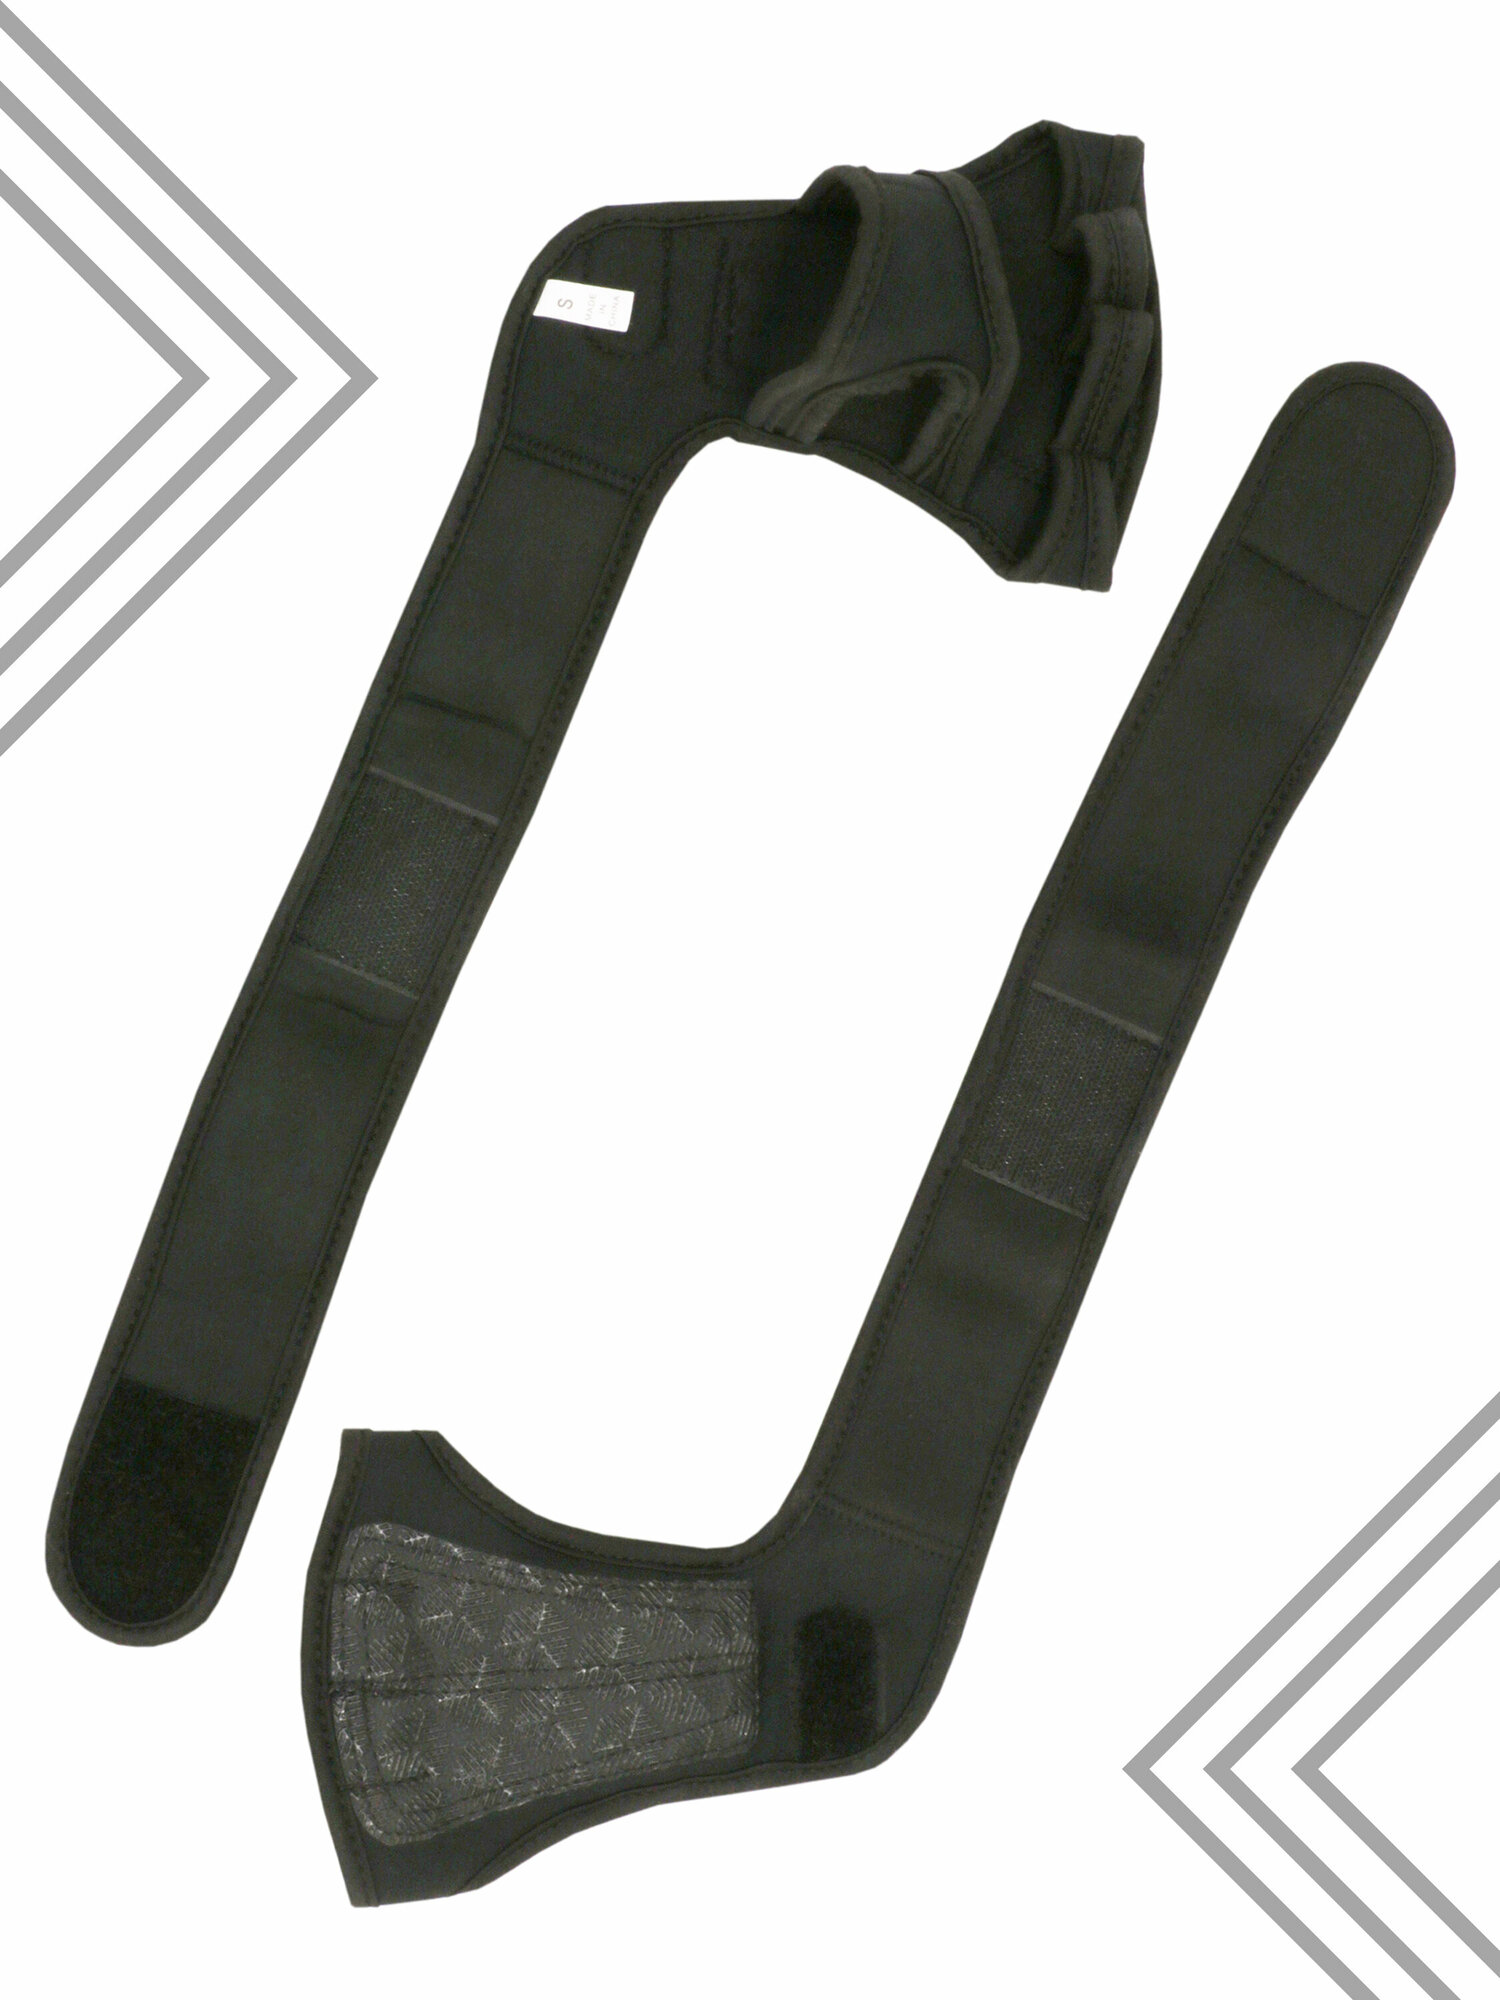 Перчатки для турника и грифа Boomshakalaka, цвет черный, размер M, обхват ладони 195-218 мм.